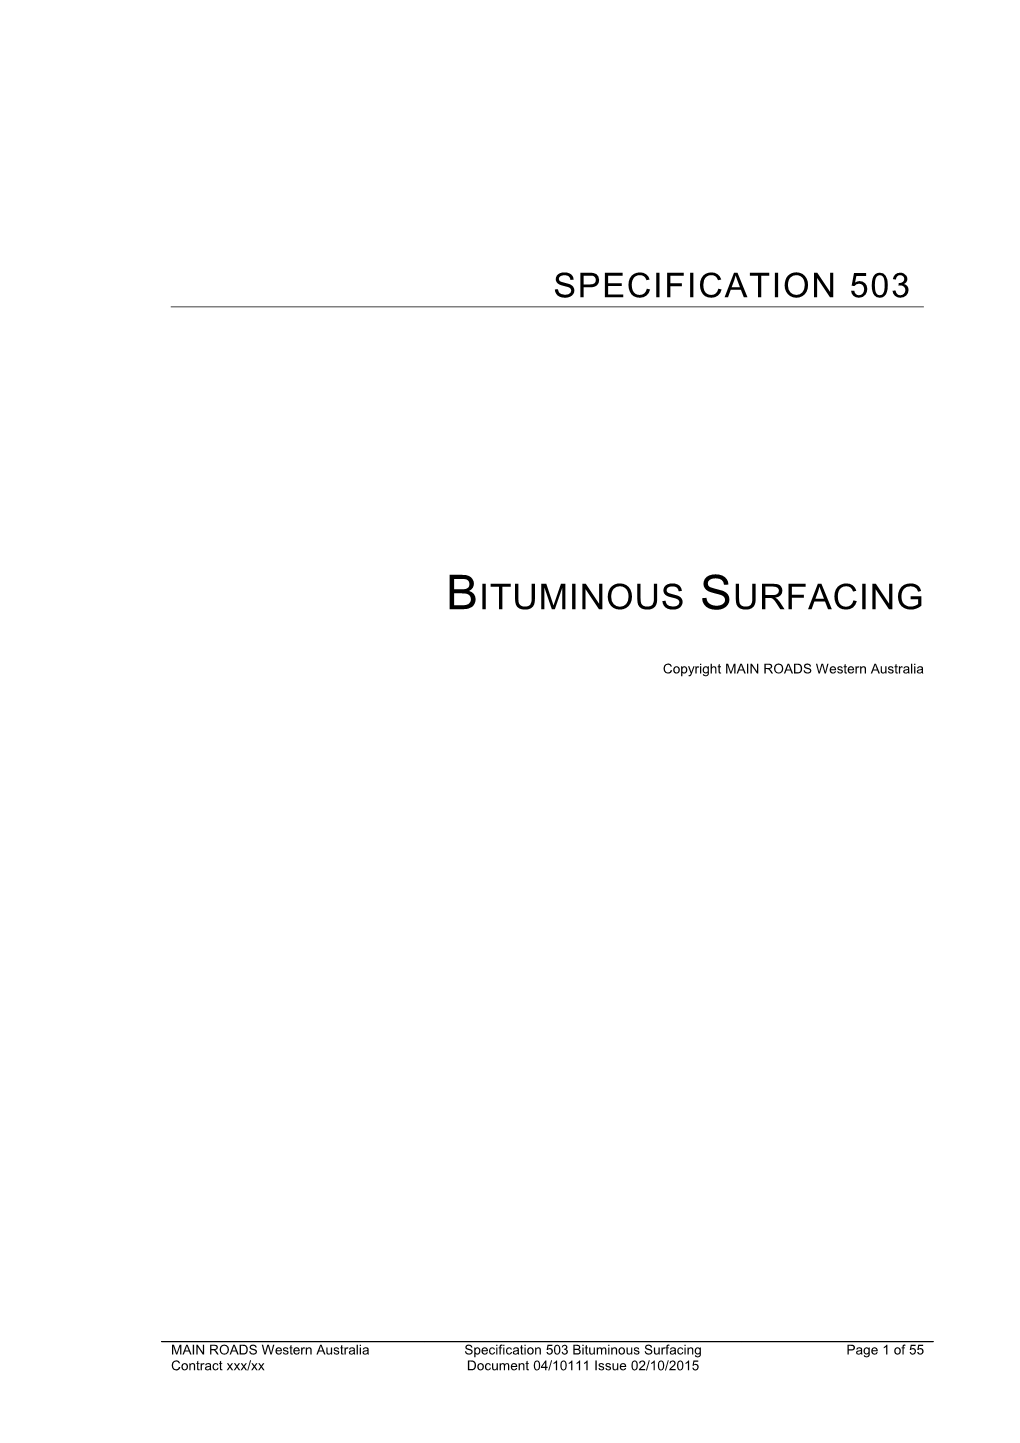 Bituminous Surfacing